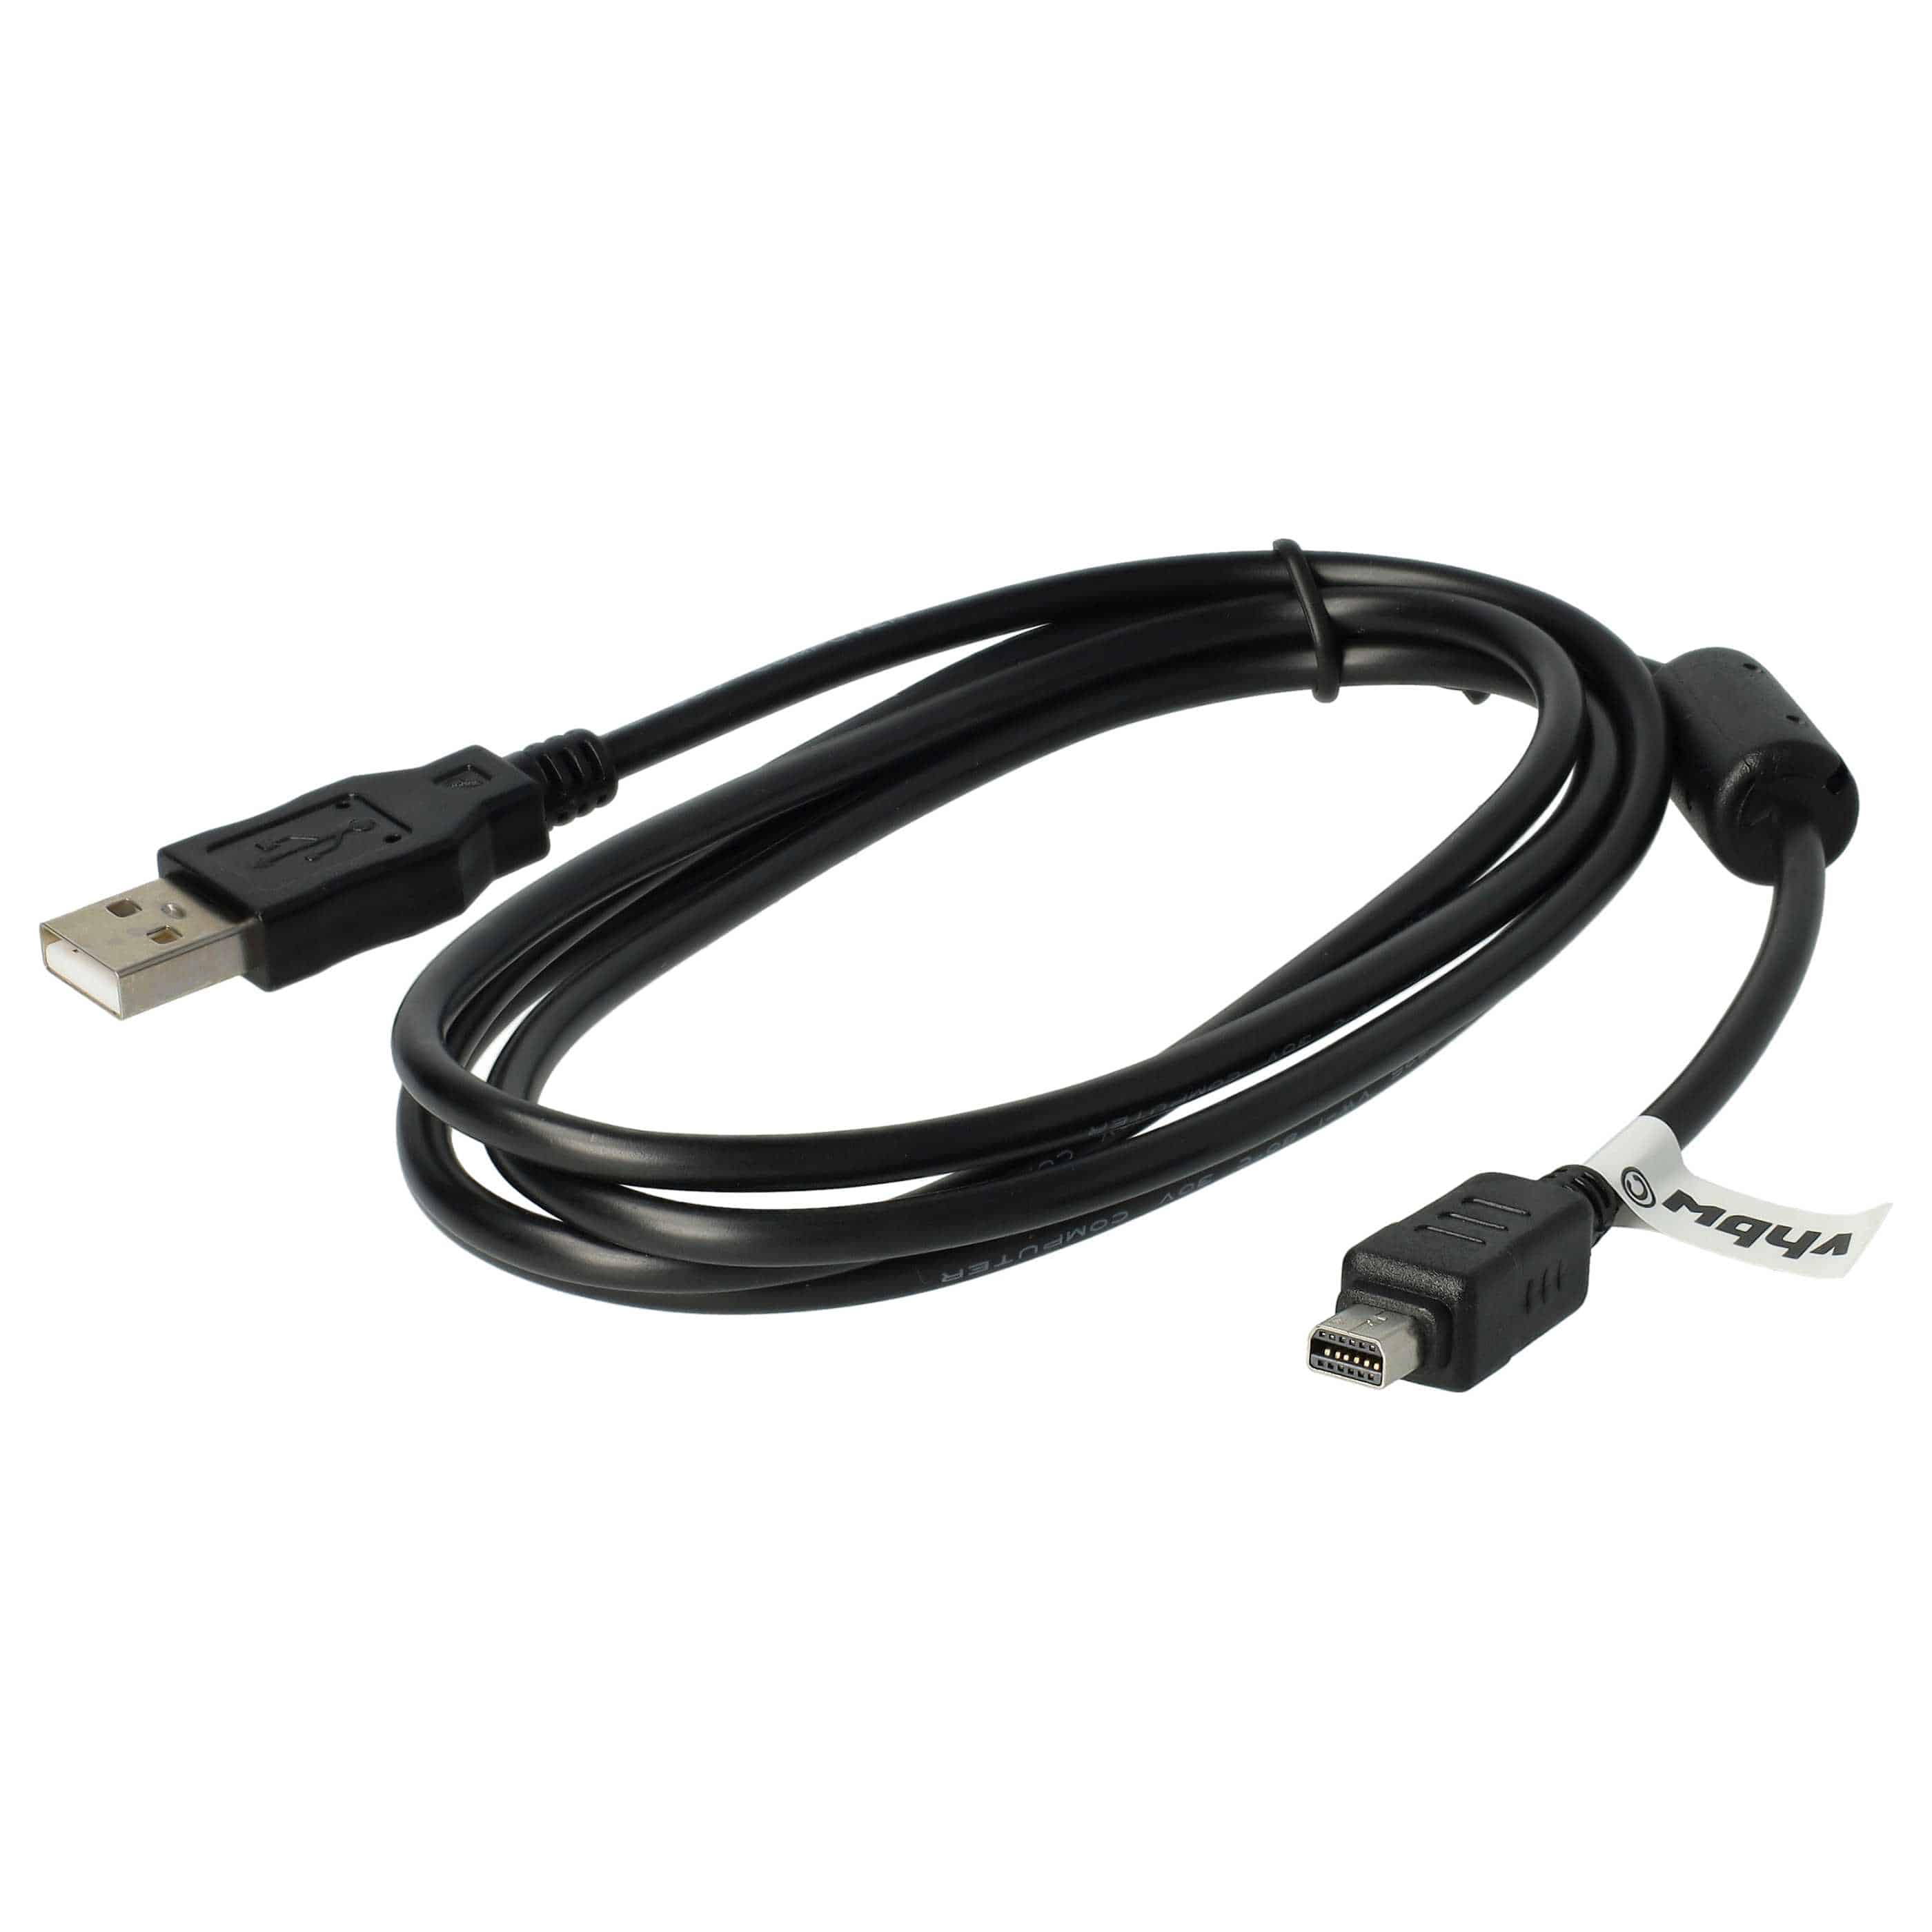 USB Datenkabel als Ersatz für Olympus CB-USB6, CB-USB5, CB-USB8 Kamera - 150 cm